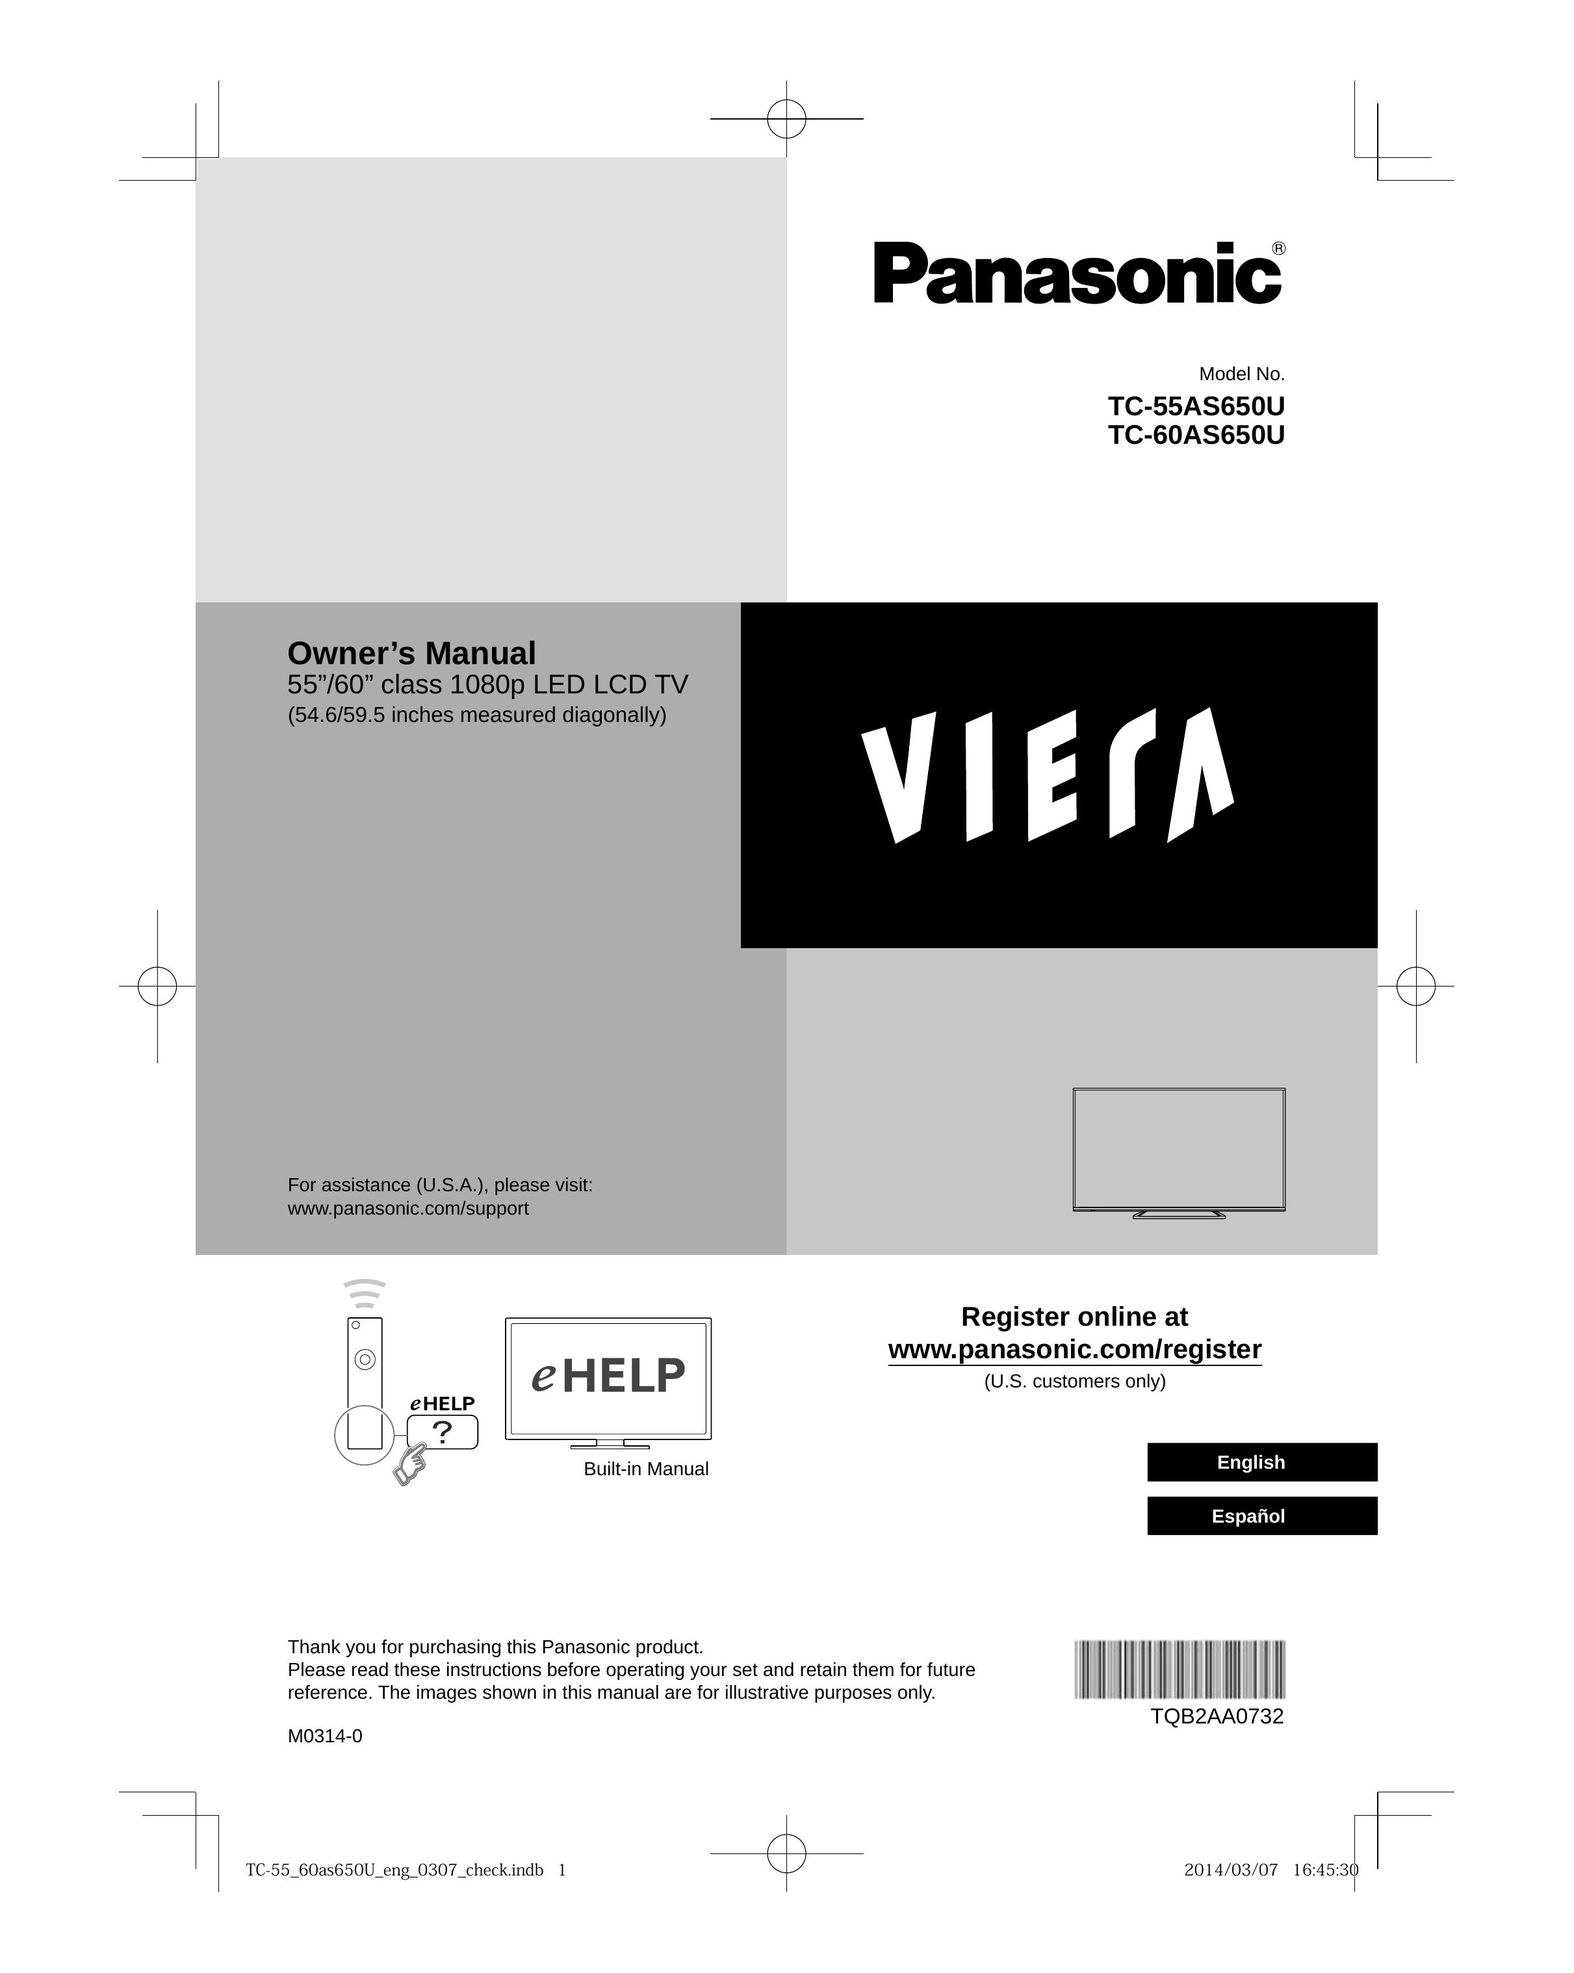 Panasonic TC-60AS650U Car Video System User Manual